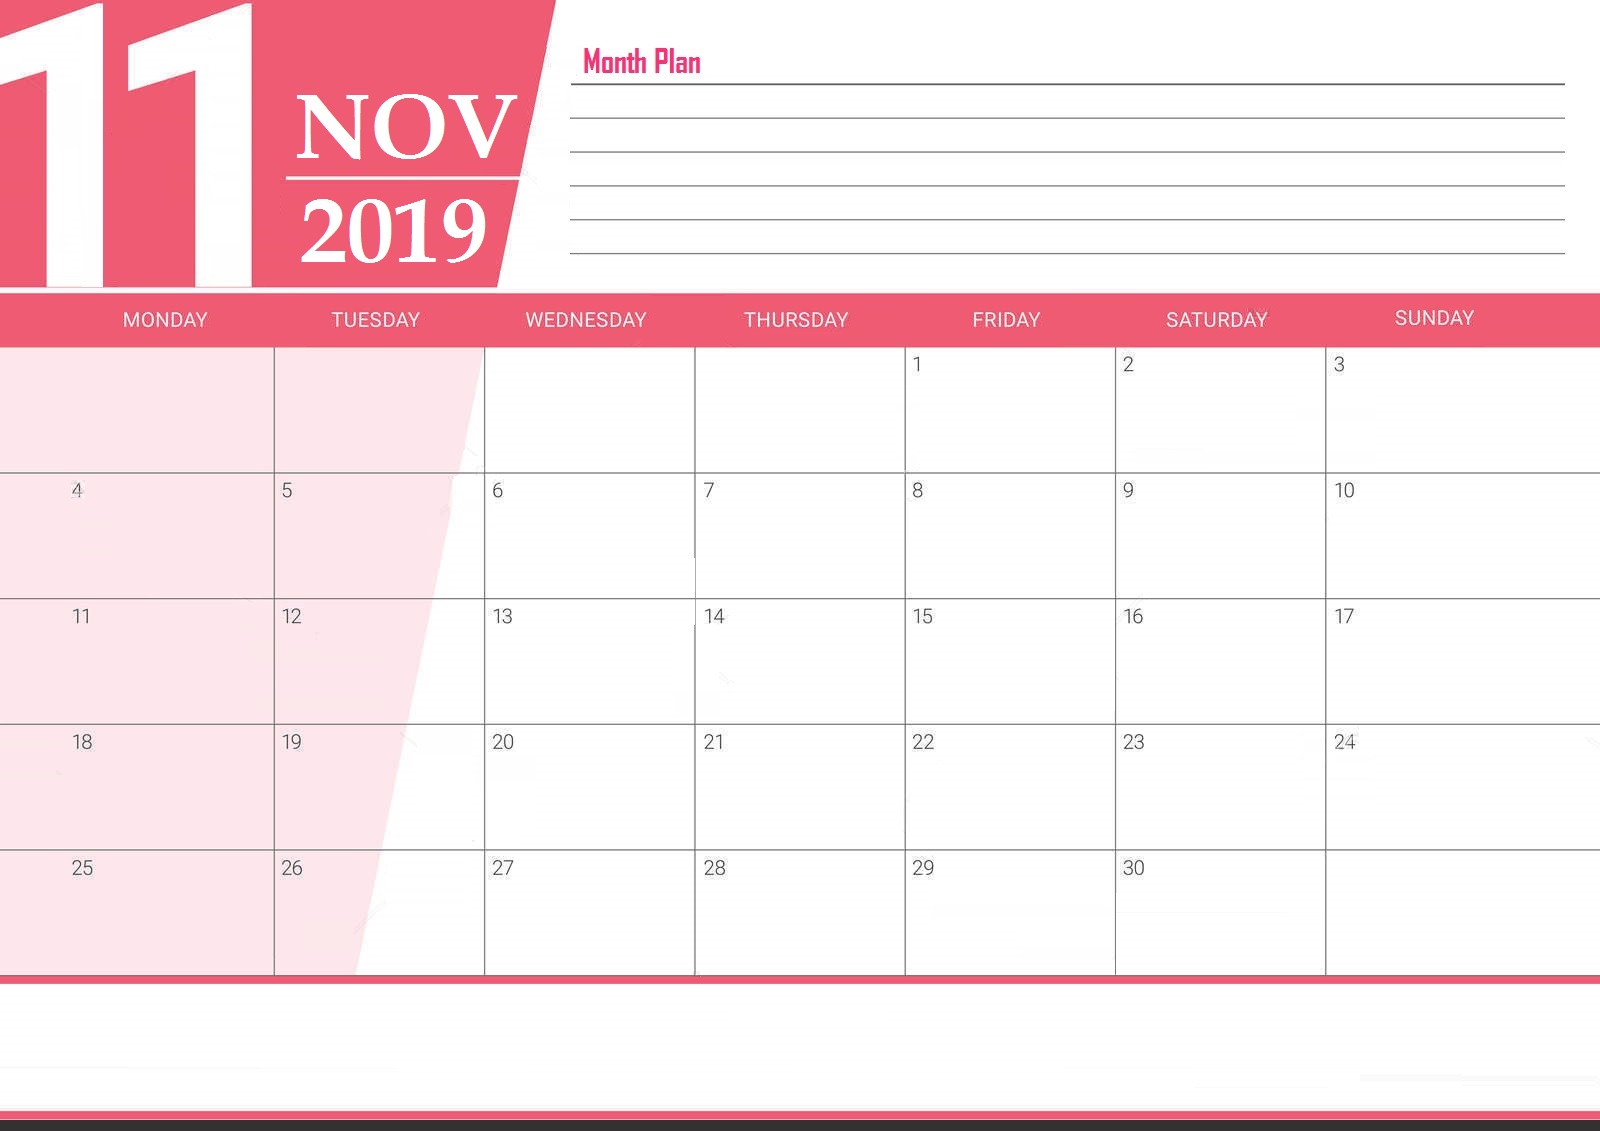 November 2019 Monthly Planner